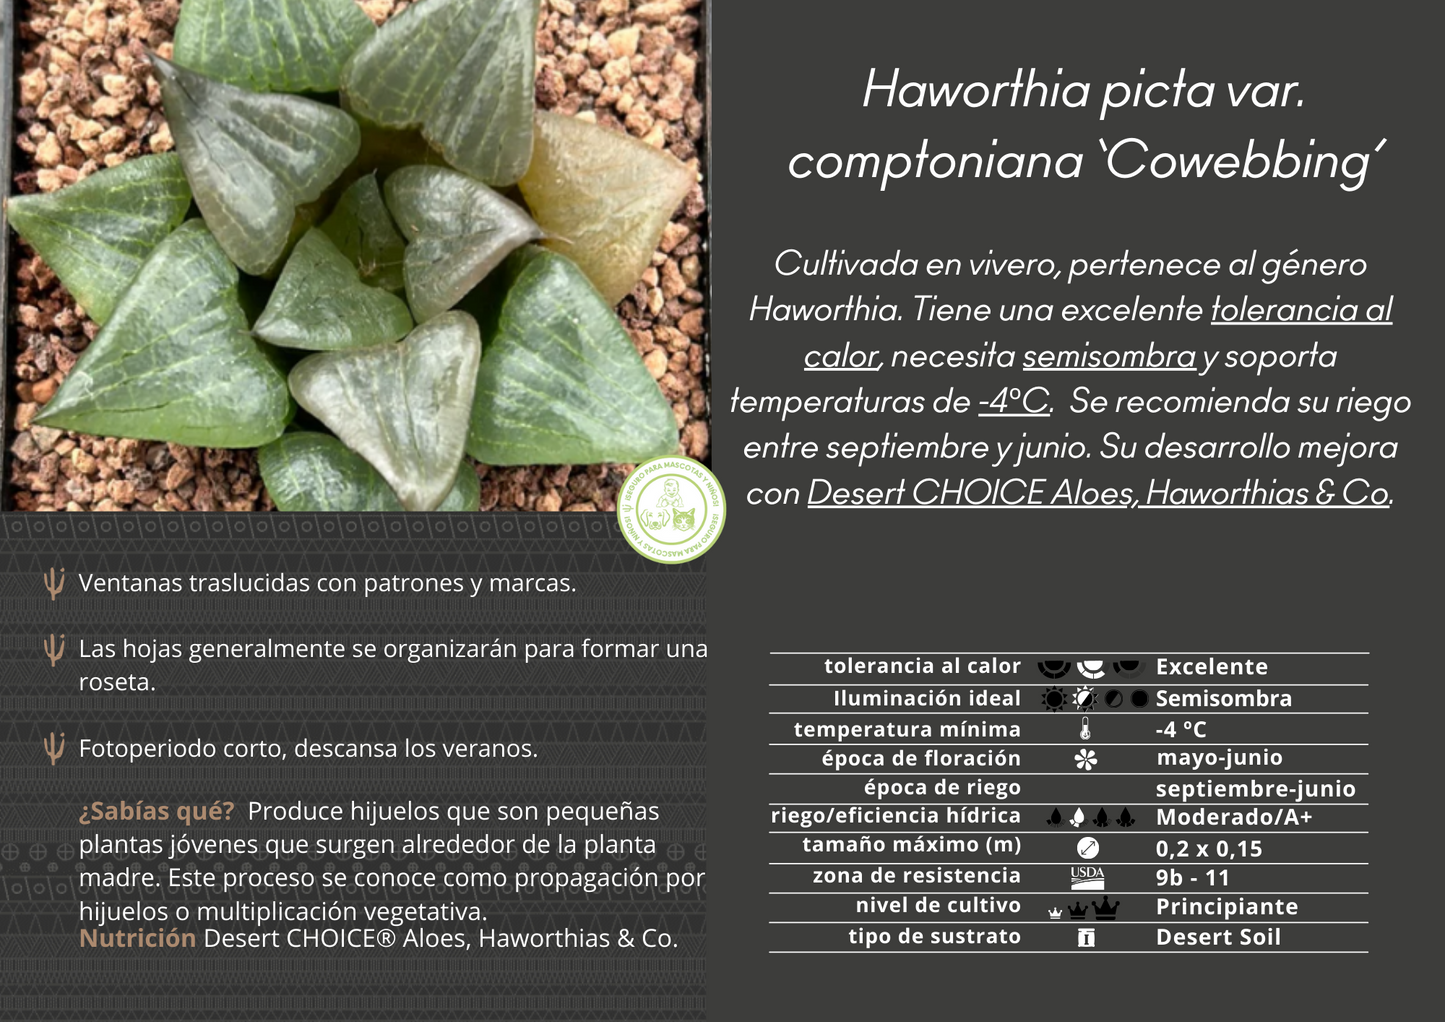 Haworthia picta var. comptoniana ‘Cowebbing’